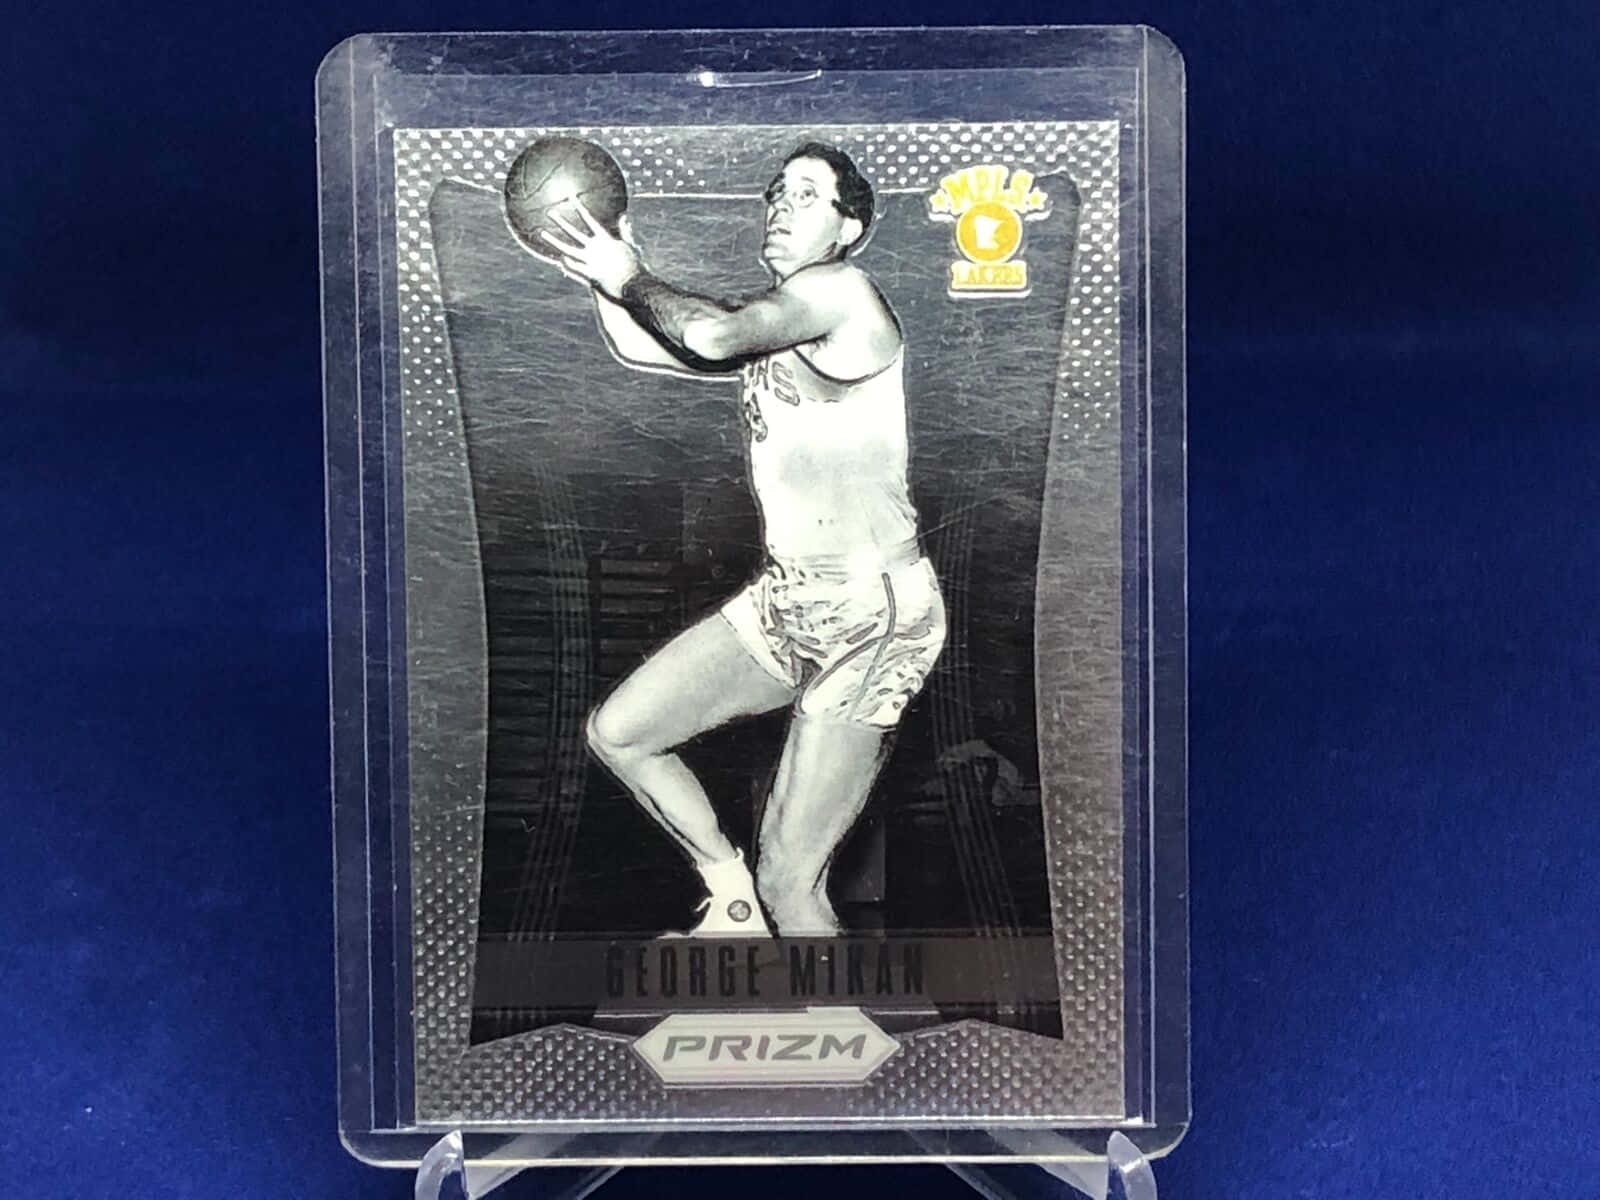 George Mikan Prizm Basketball Card skjuler tapetdesignet. Wallpaper